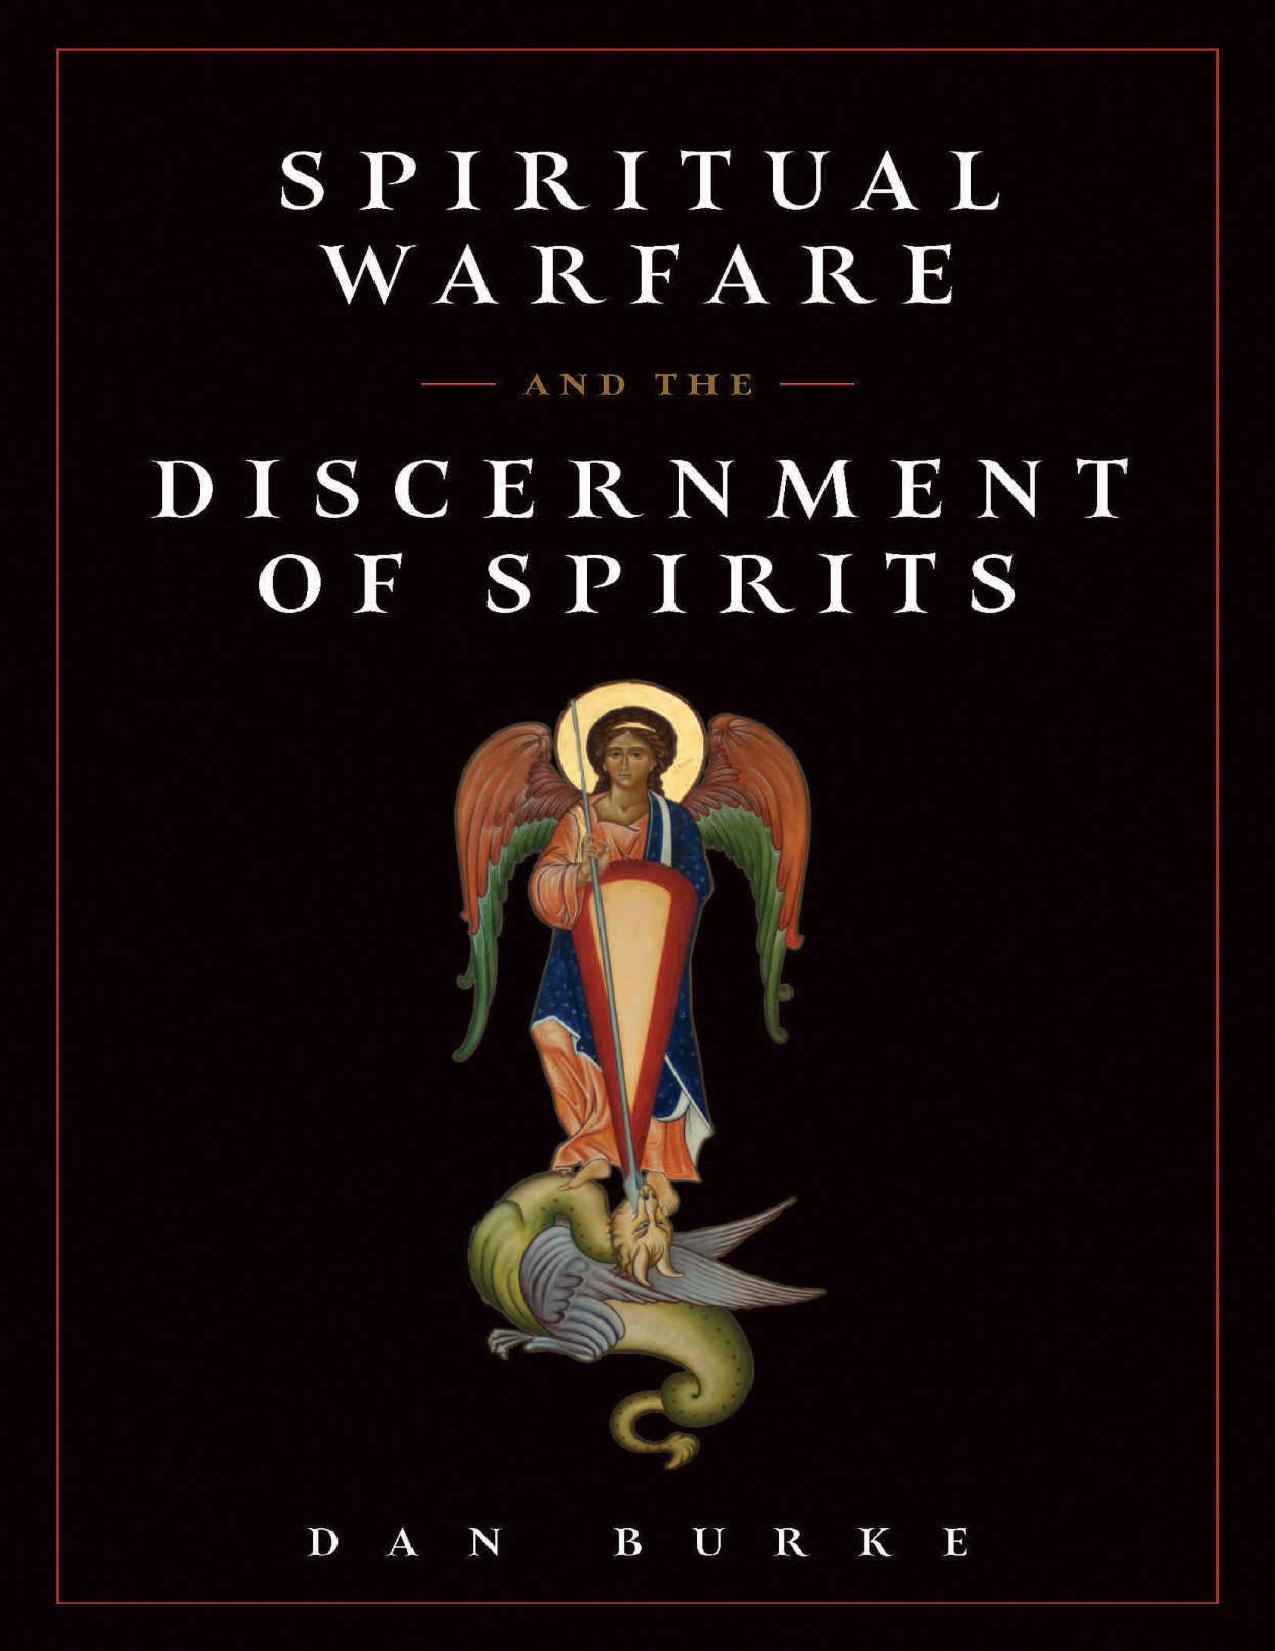 Spiritual Warfare and the Discernment of Spirits by Dan Burke